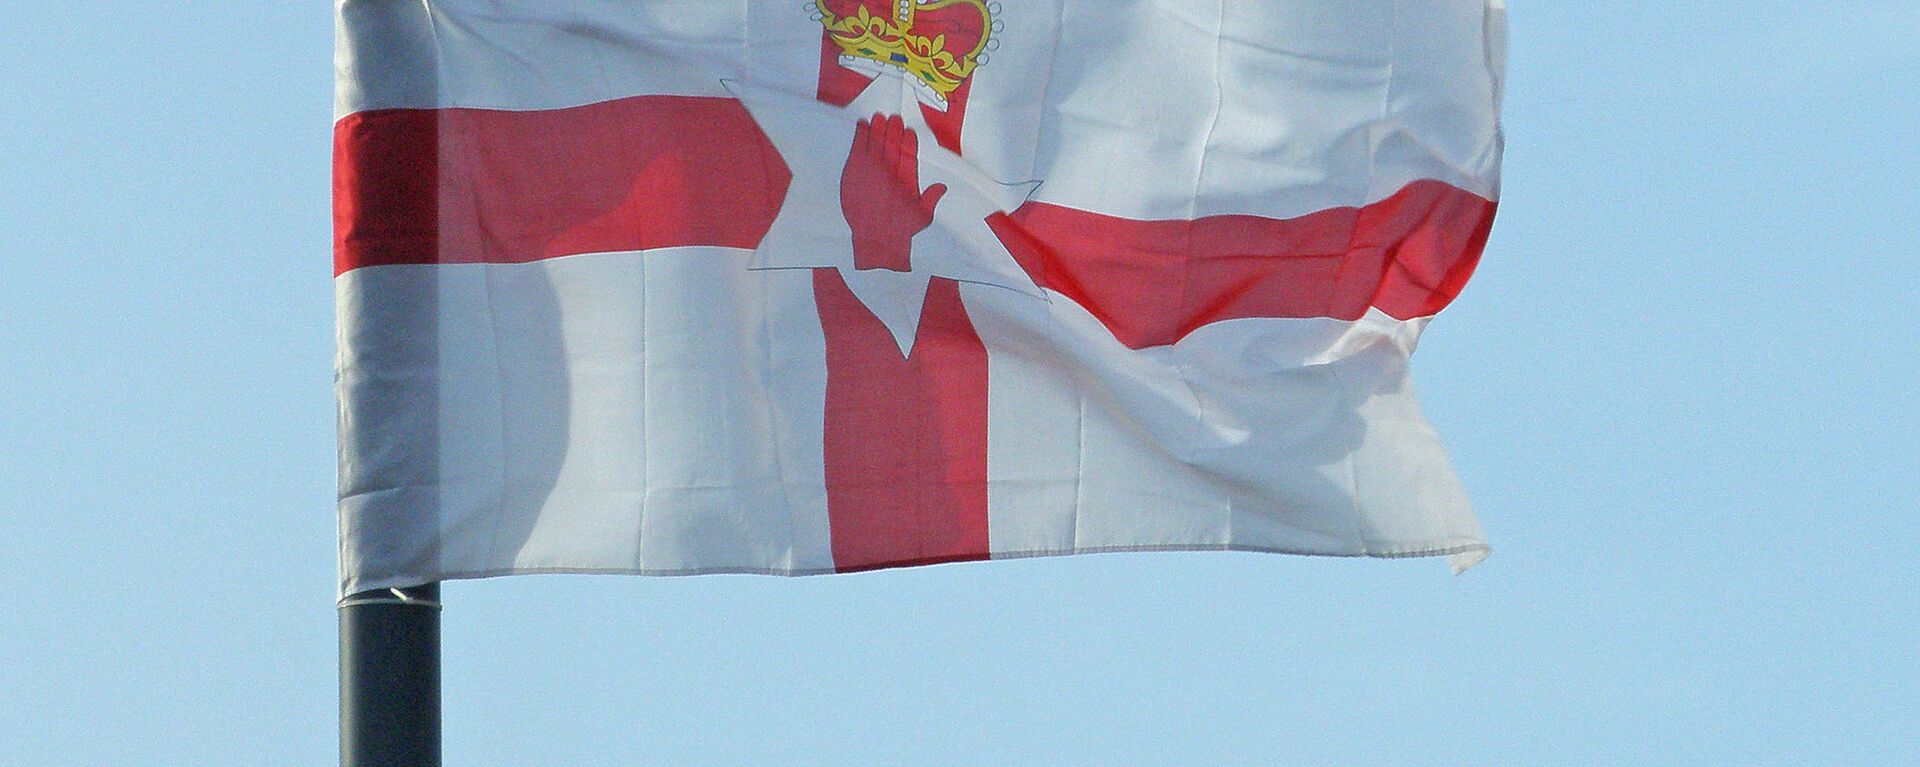 Bandera de Irlanda del Norte - Sputnik Mundo, 1920, 08.10.2021